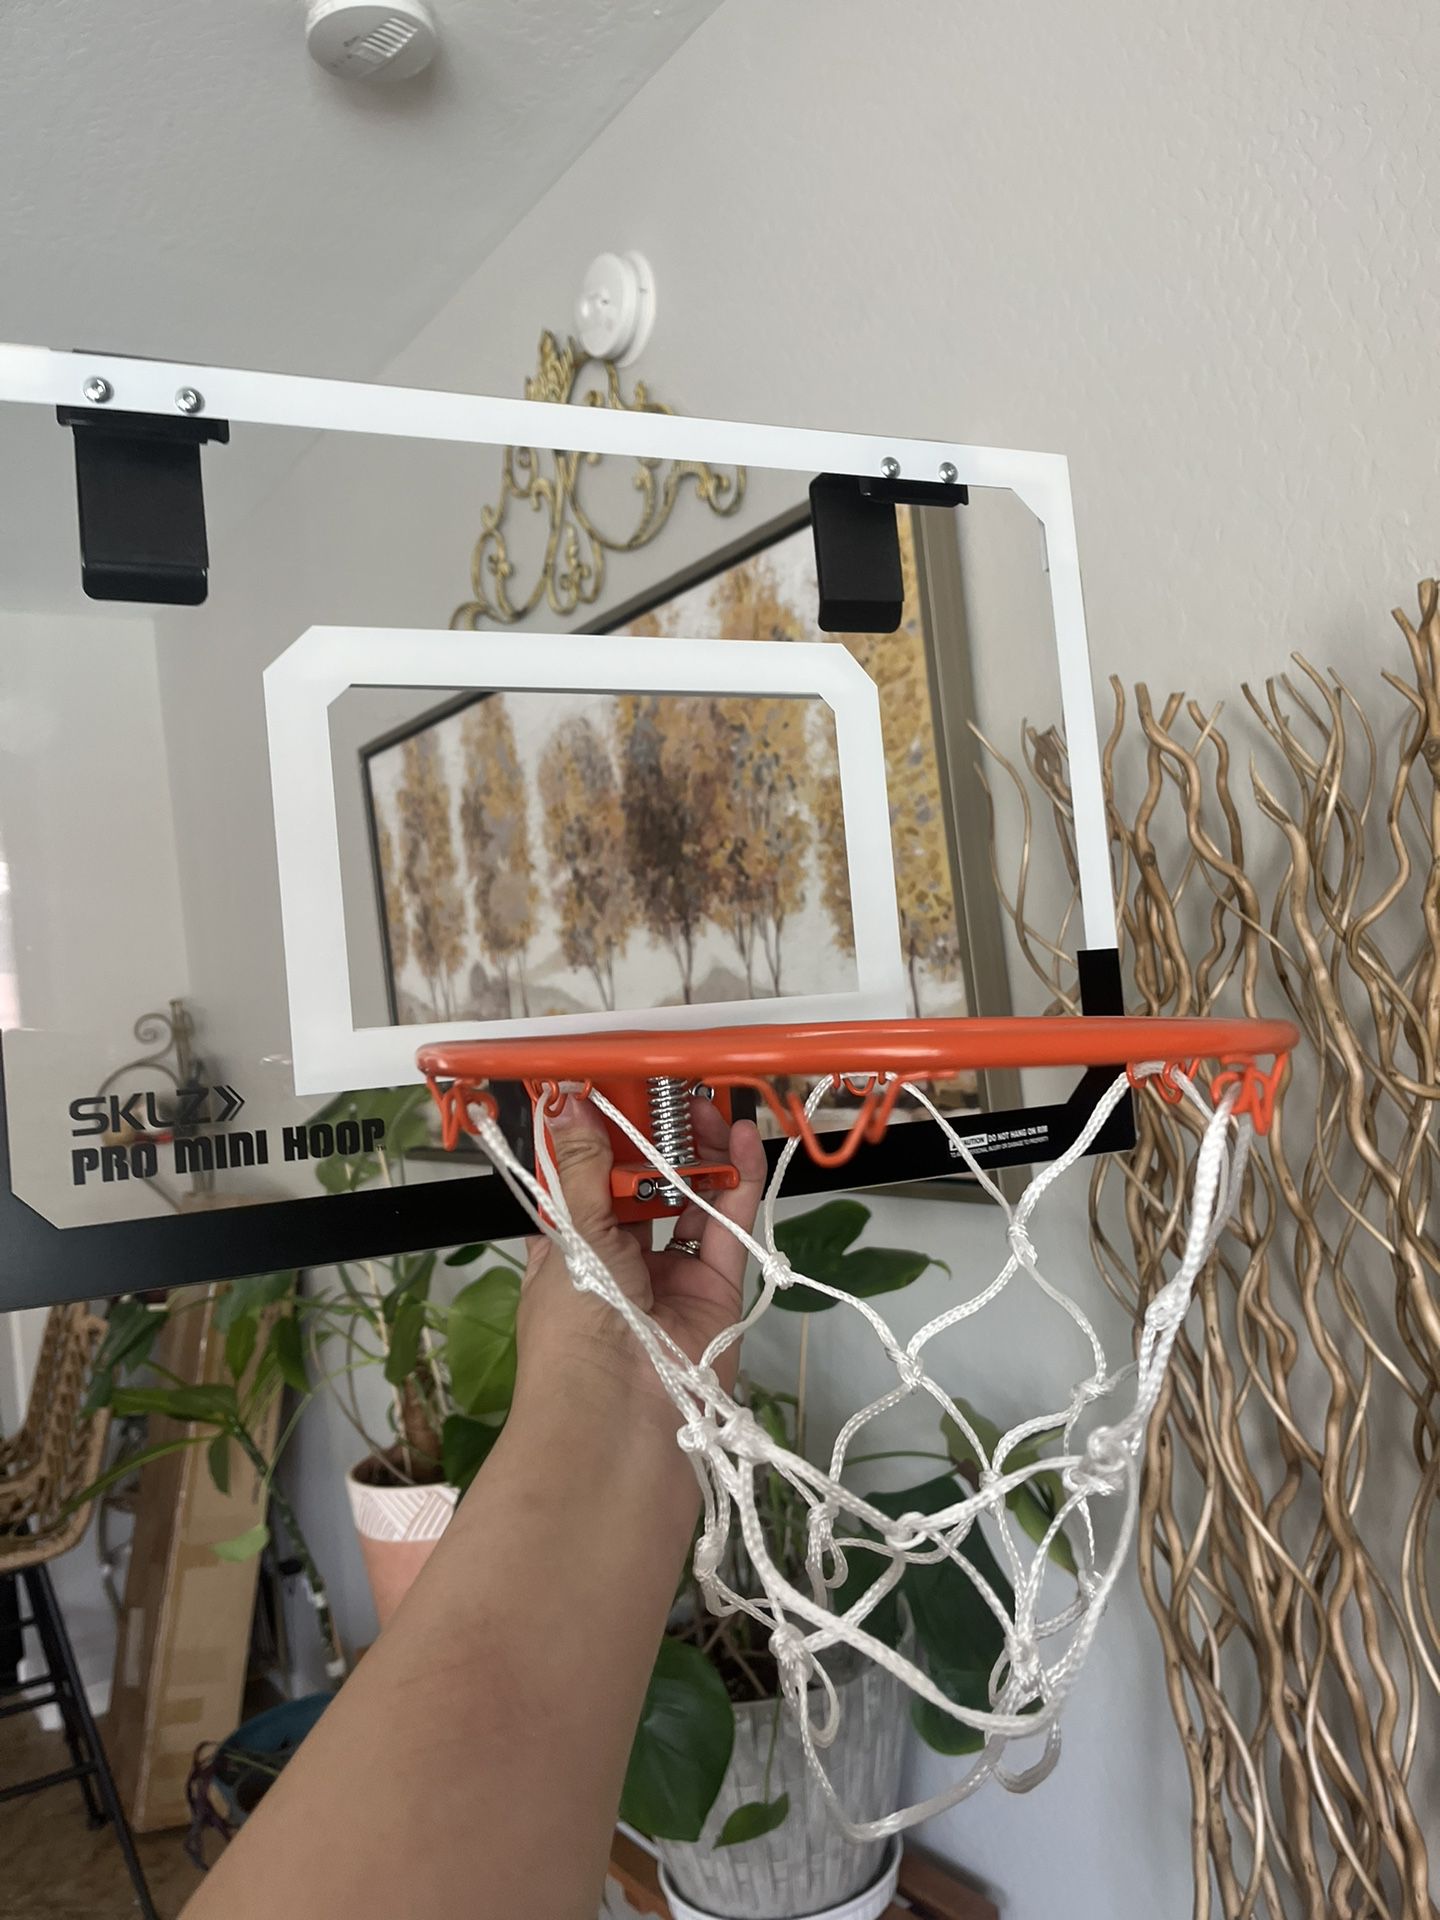 SKLZ Pro Mini Basketball Hoop 